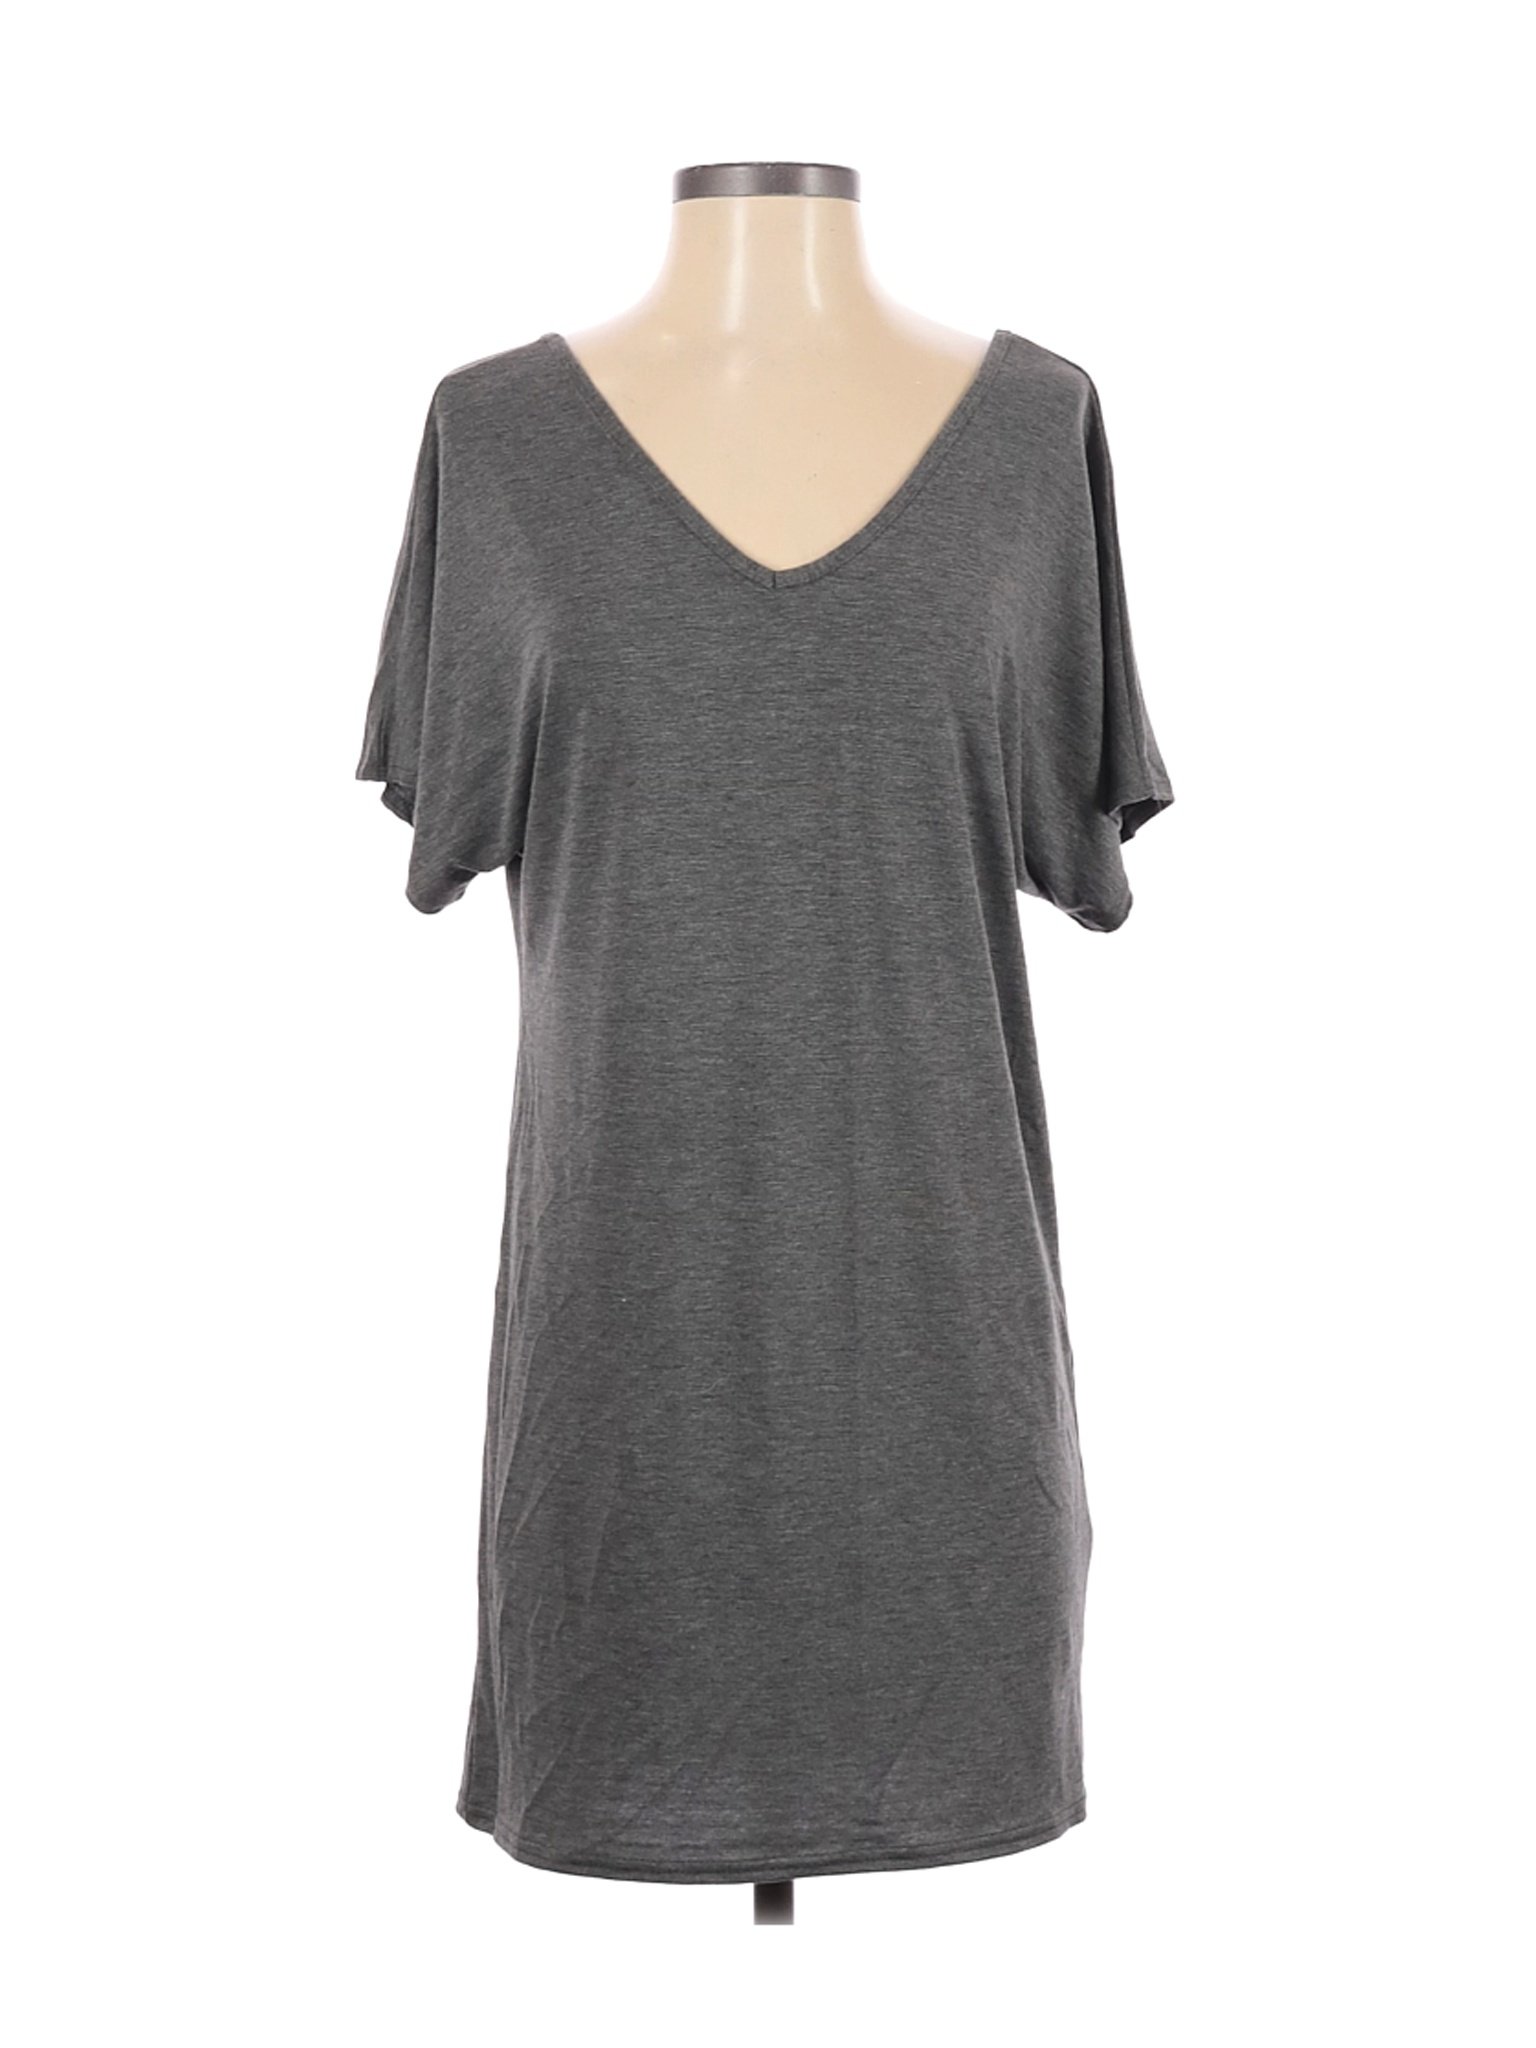 PrettyLittleThing Women Gray Short Sleeve T-Shirt 6 | eBay